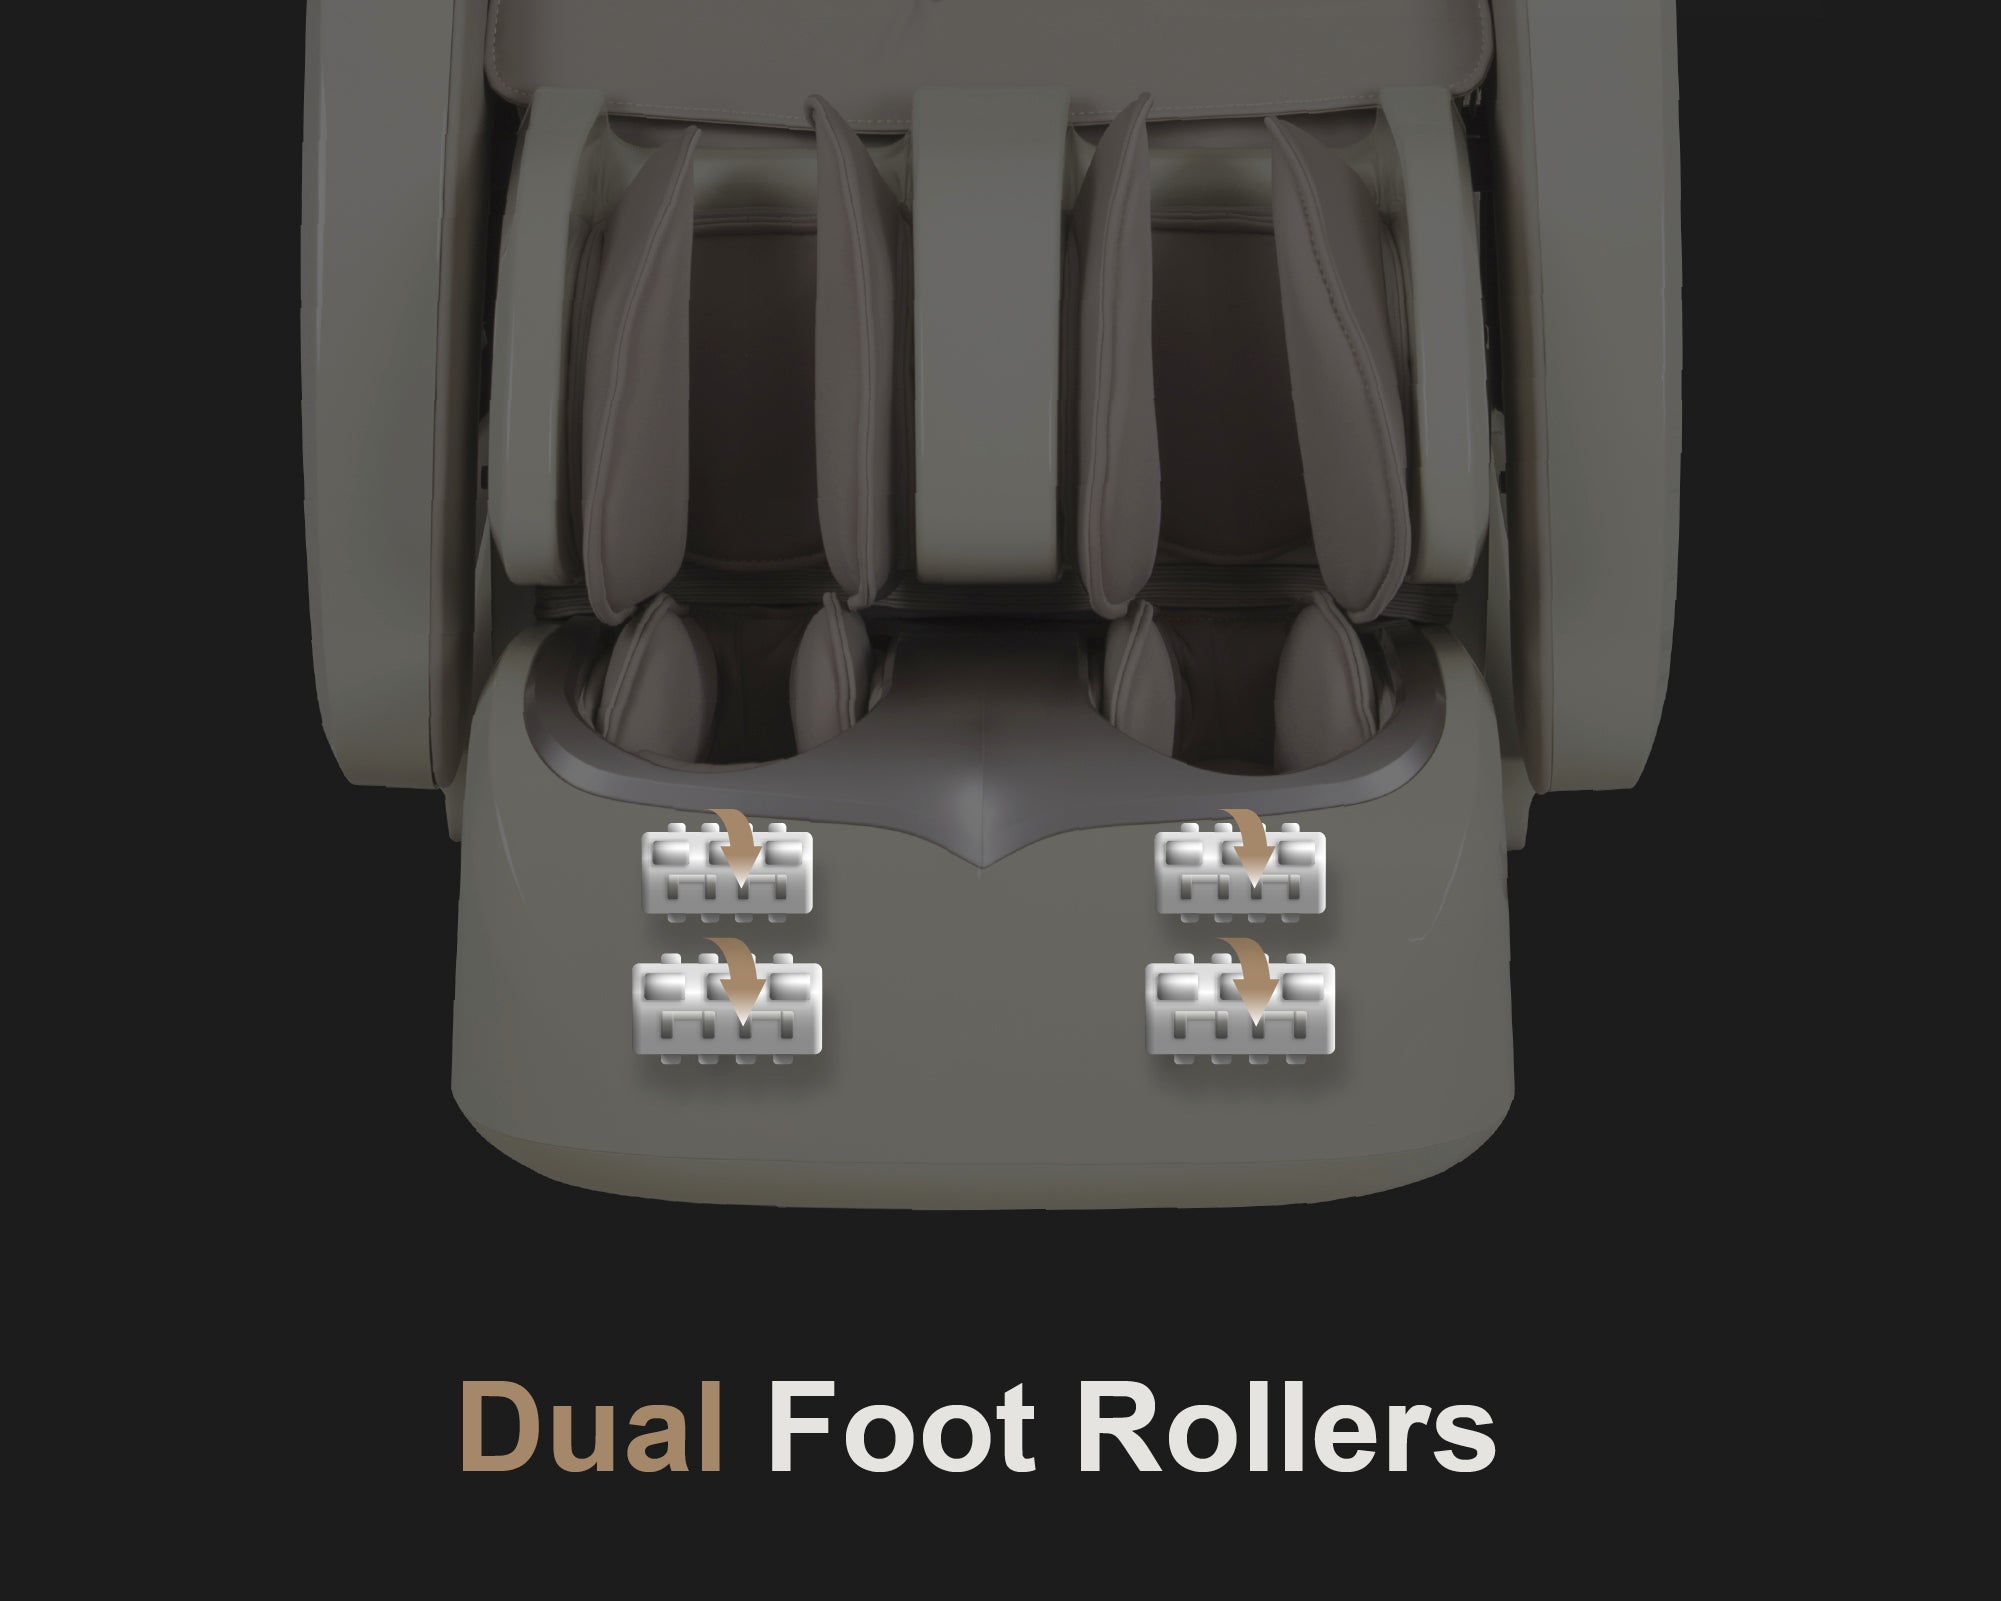 Osaki OS-Pro 3D Tecno Full Body Massage Chair, Dual Foot Rollers